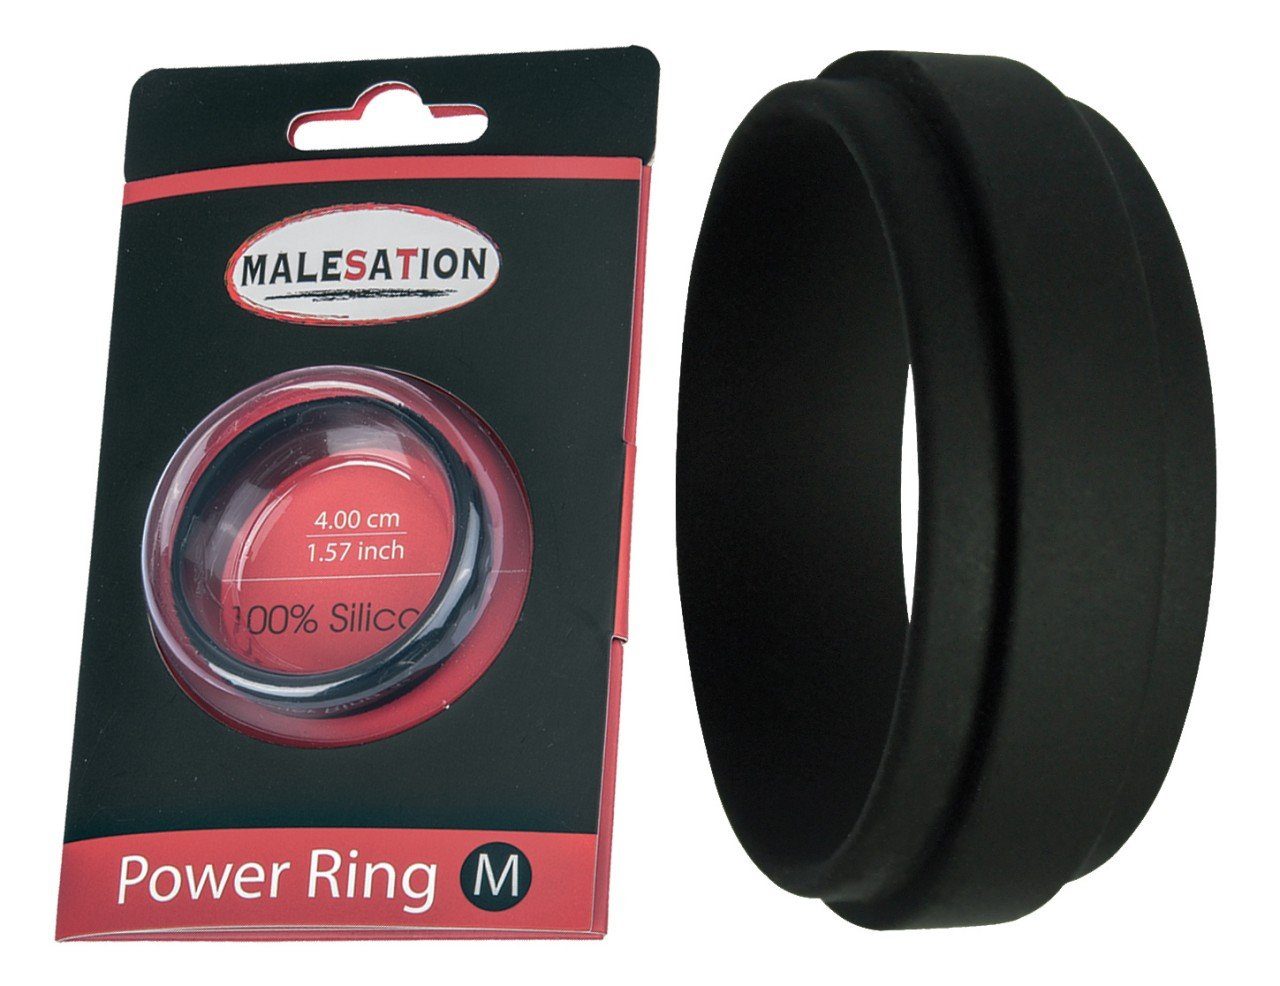 Malesation Penisring M (Large,Medium) - Power Ring MALESATION